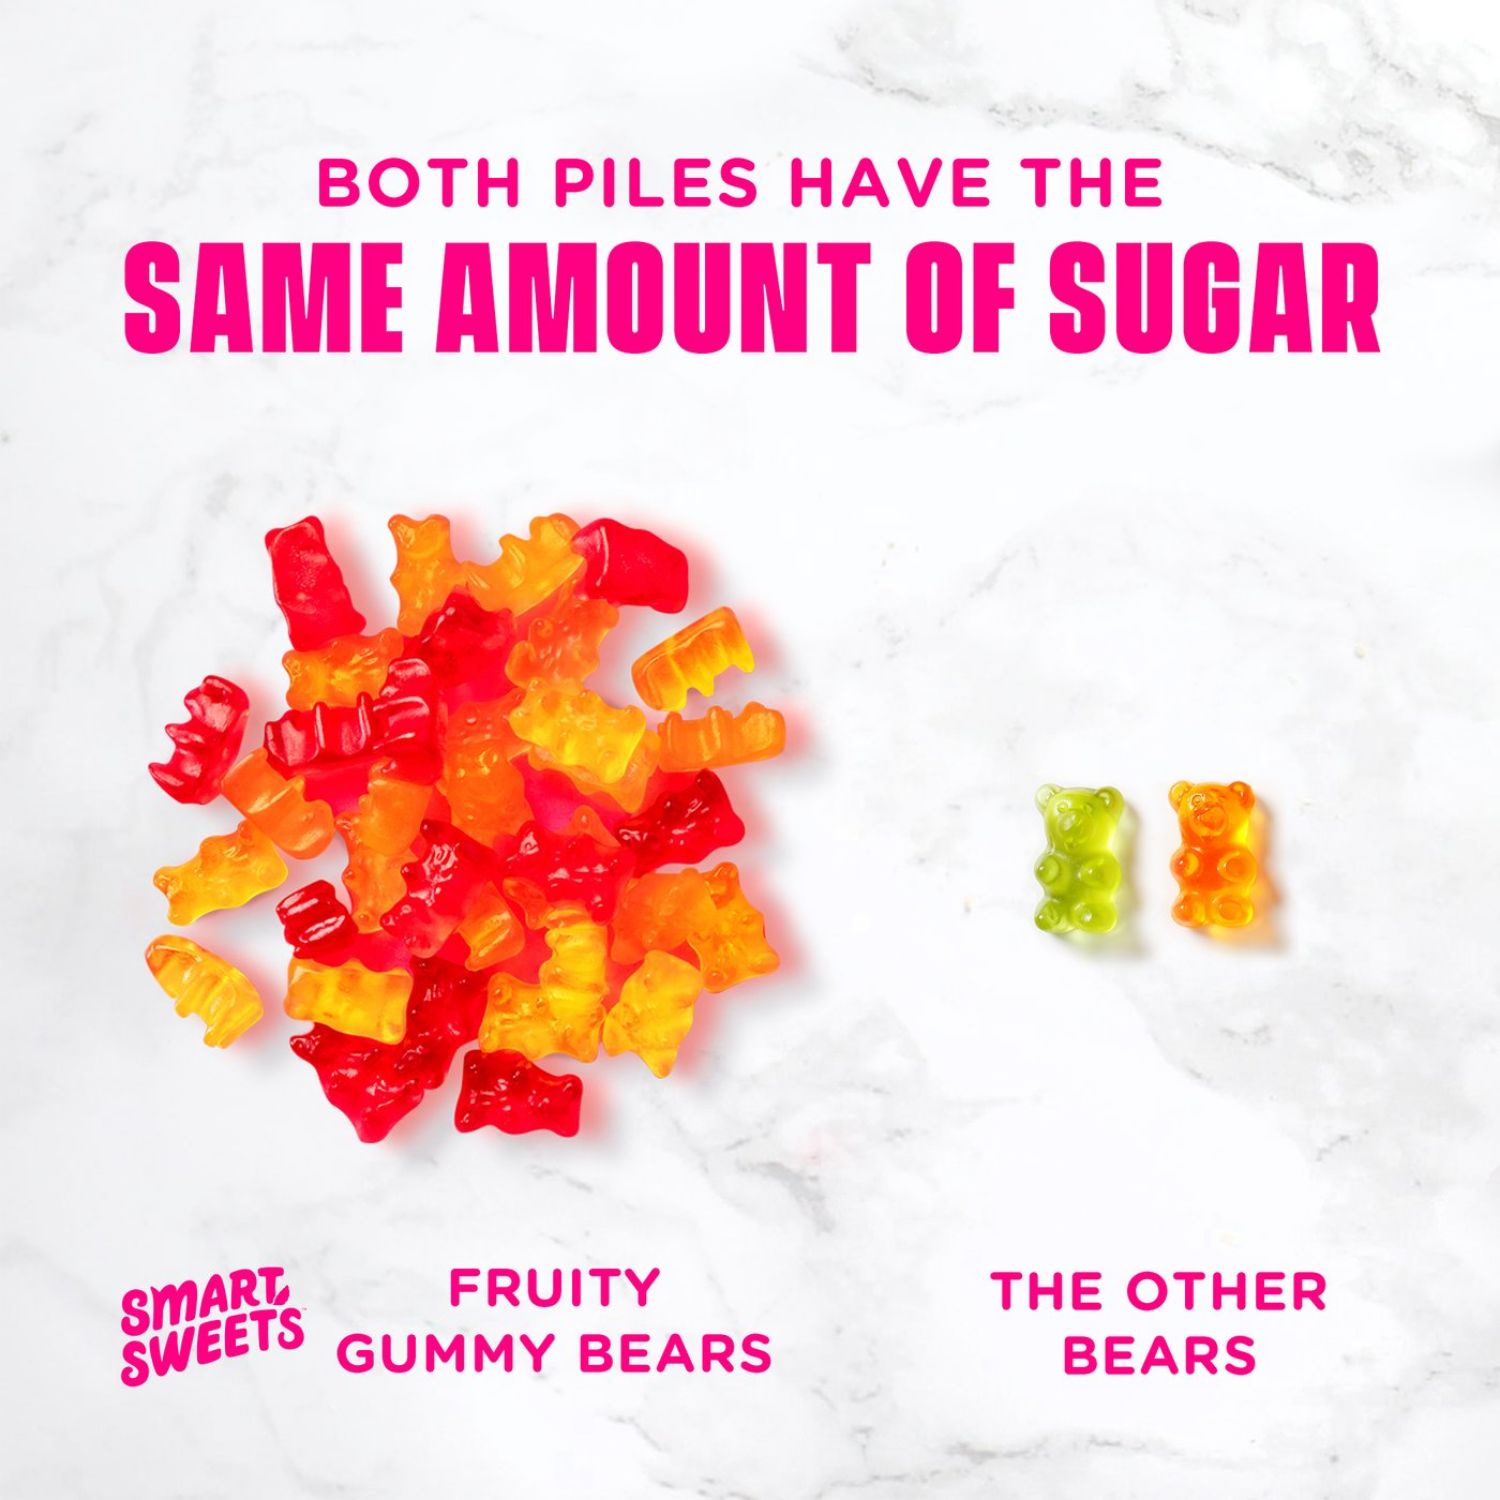 Fruity Gummy Bears, Keto Gummies, High Fiber, Low Sugar, Smart